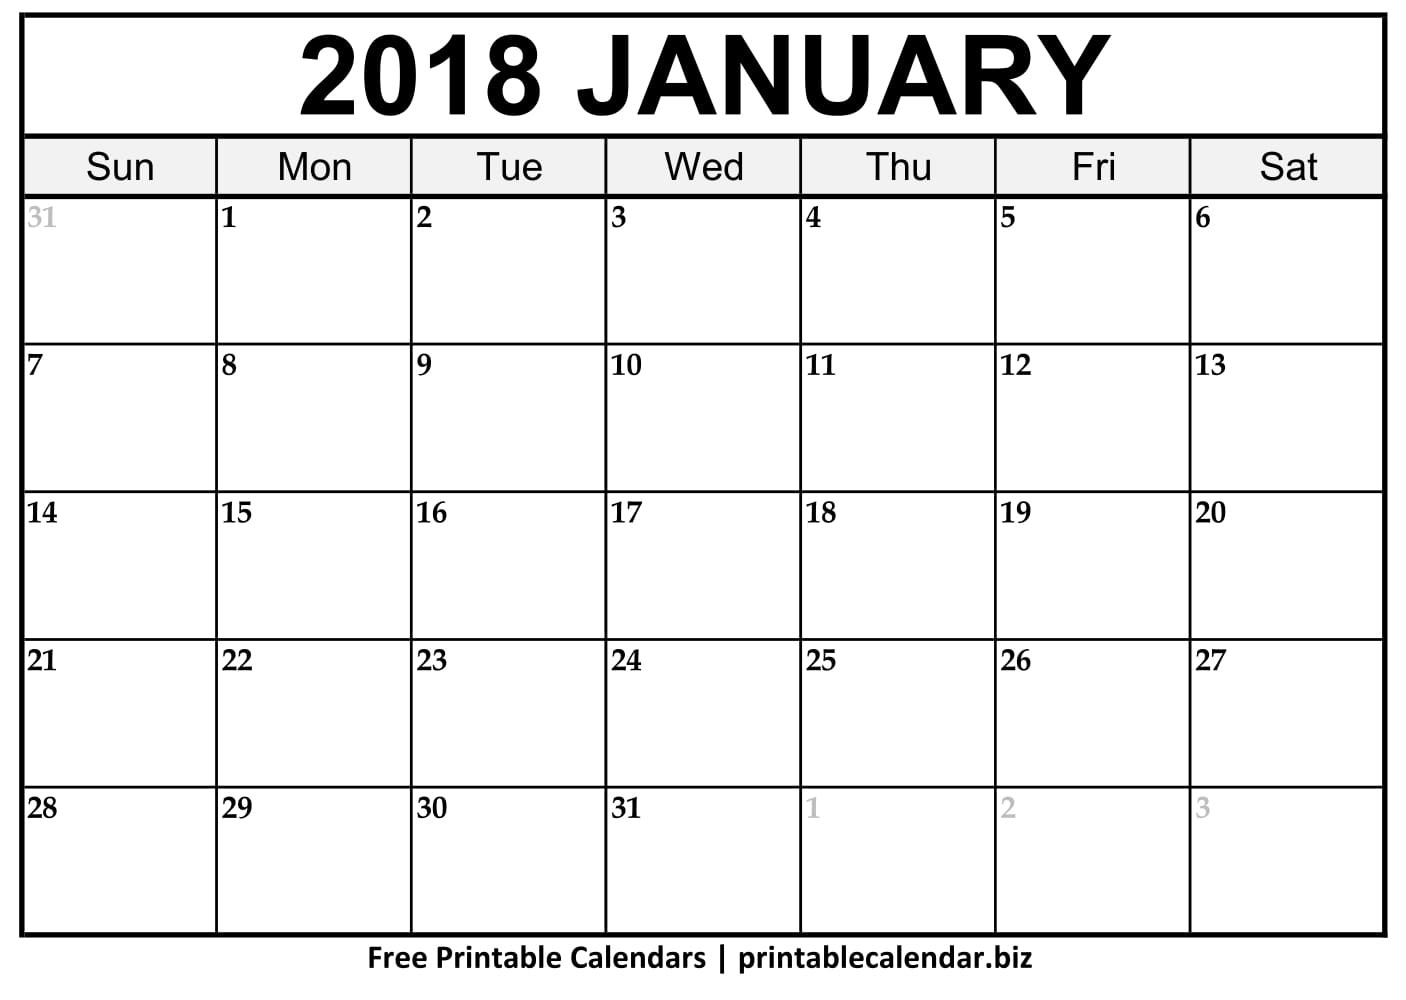 2019 Printable Calendar Templates - Printablecalendar.biz-Printable Monthly Calendar That I Can Edit